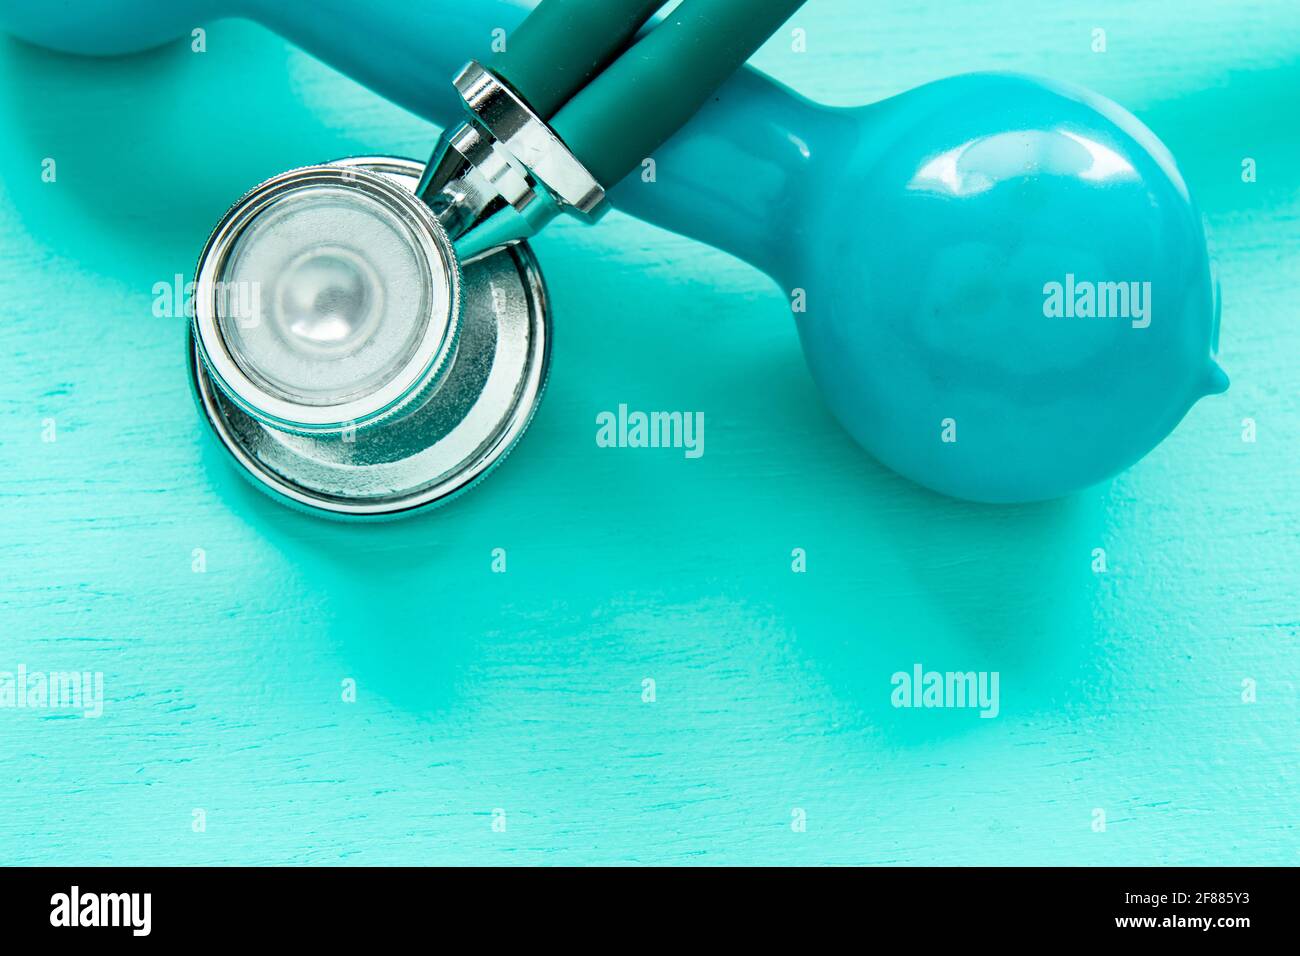 stethoscope and weight for physical exercise symbolizing mental balance Stock Photo